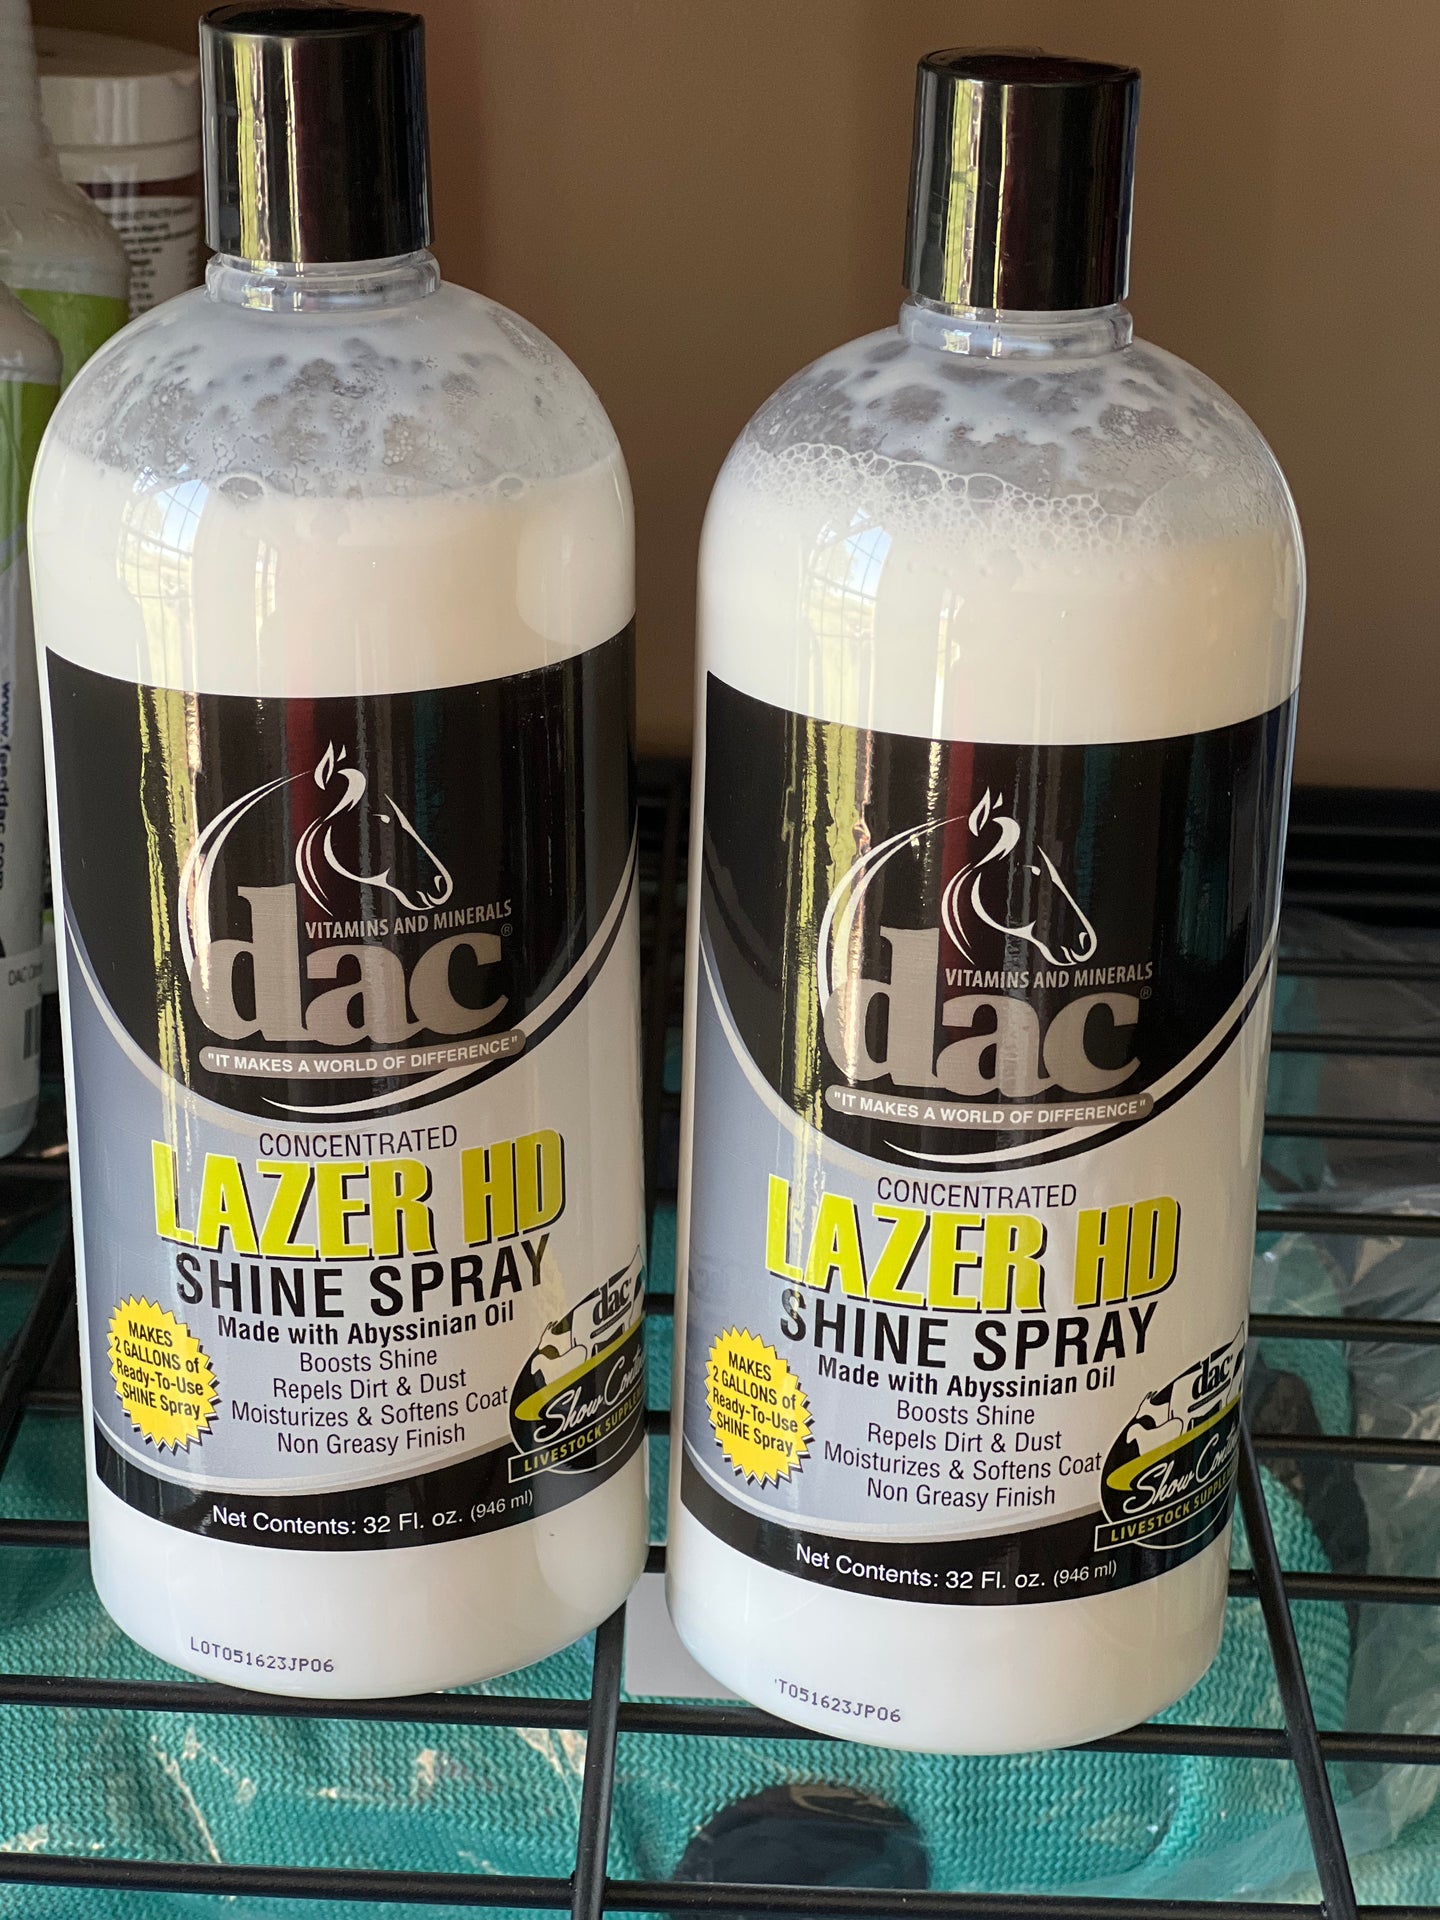 DAC Lazer HD Shine Spray